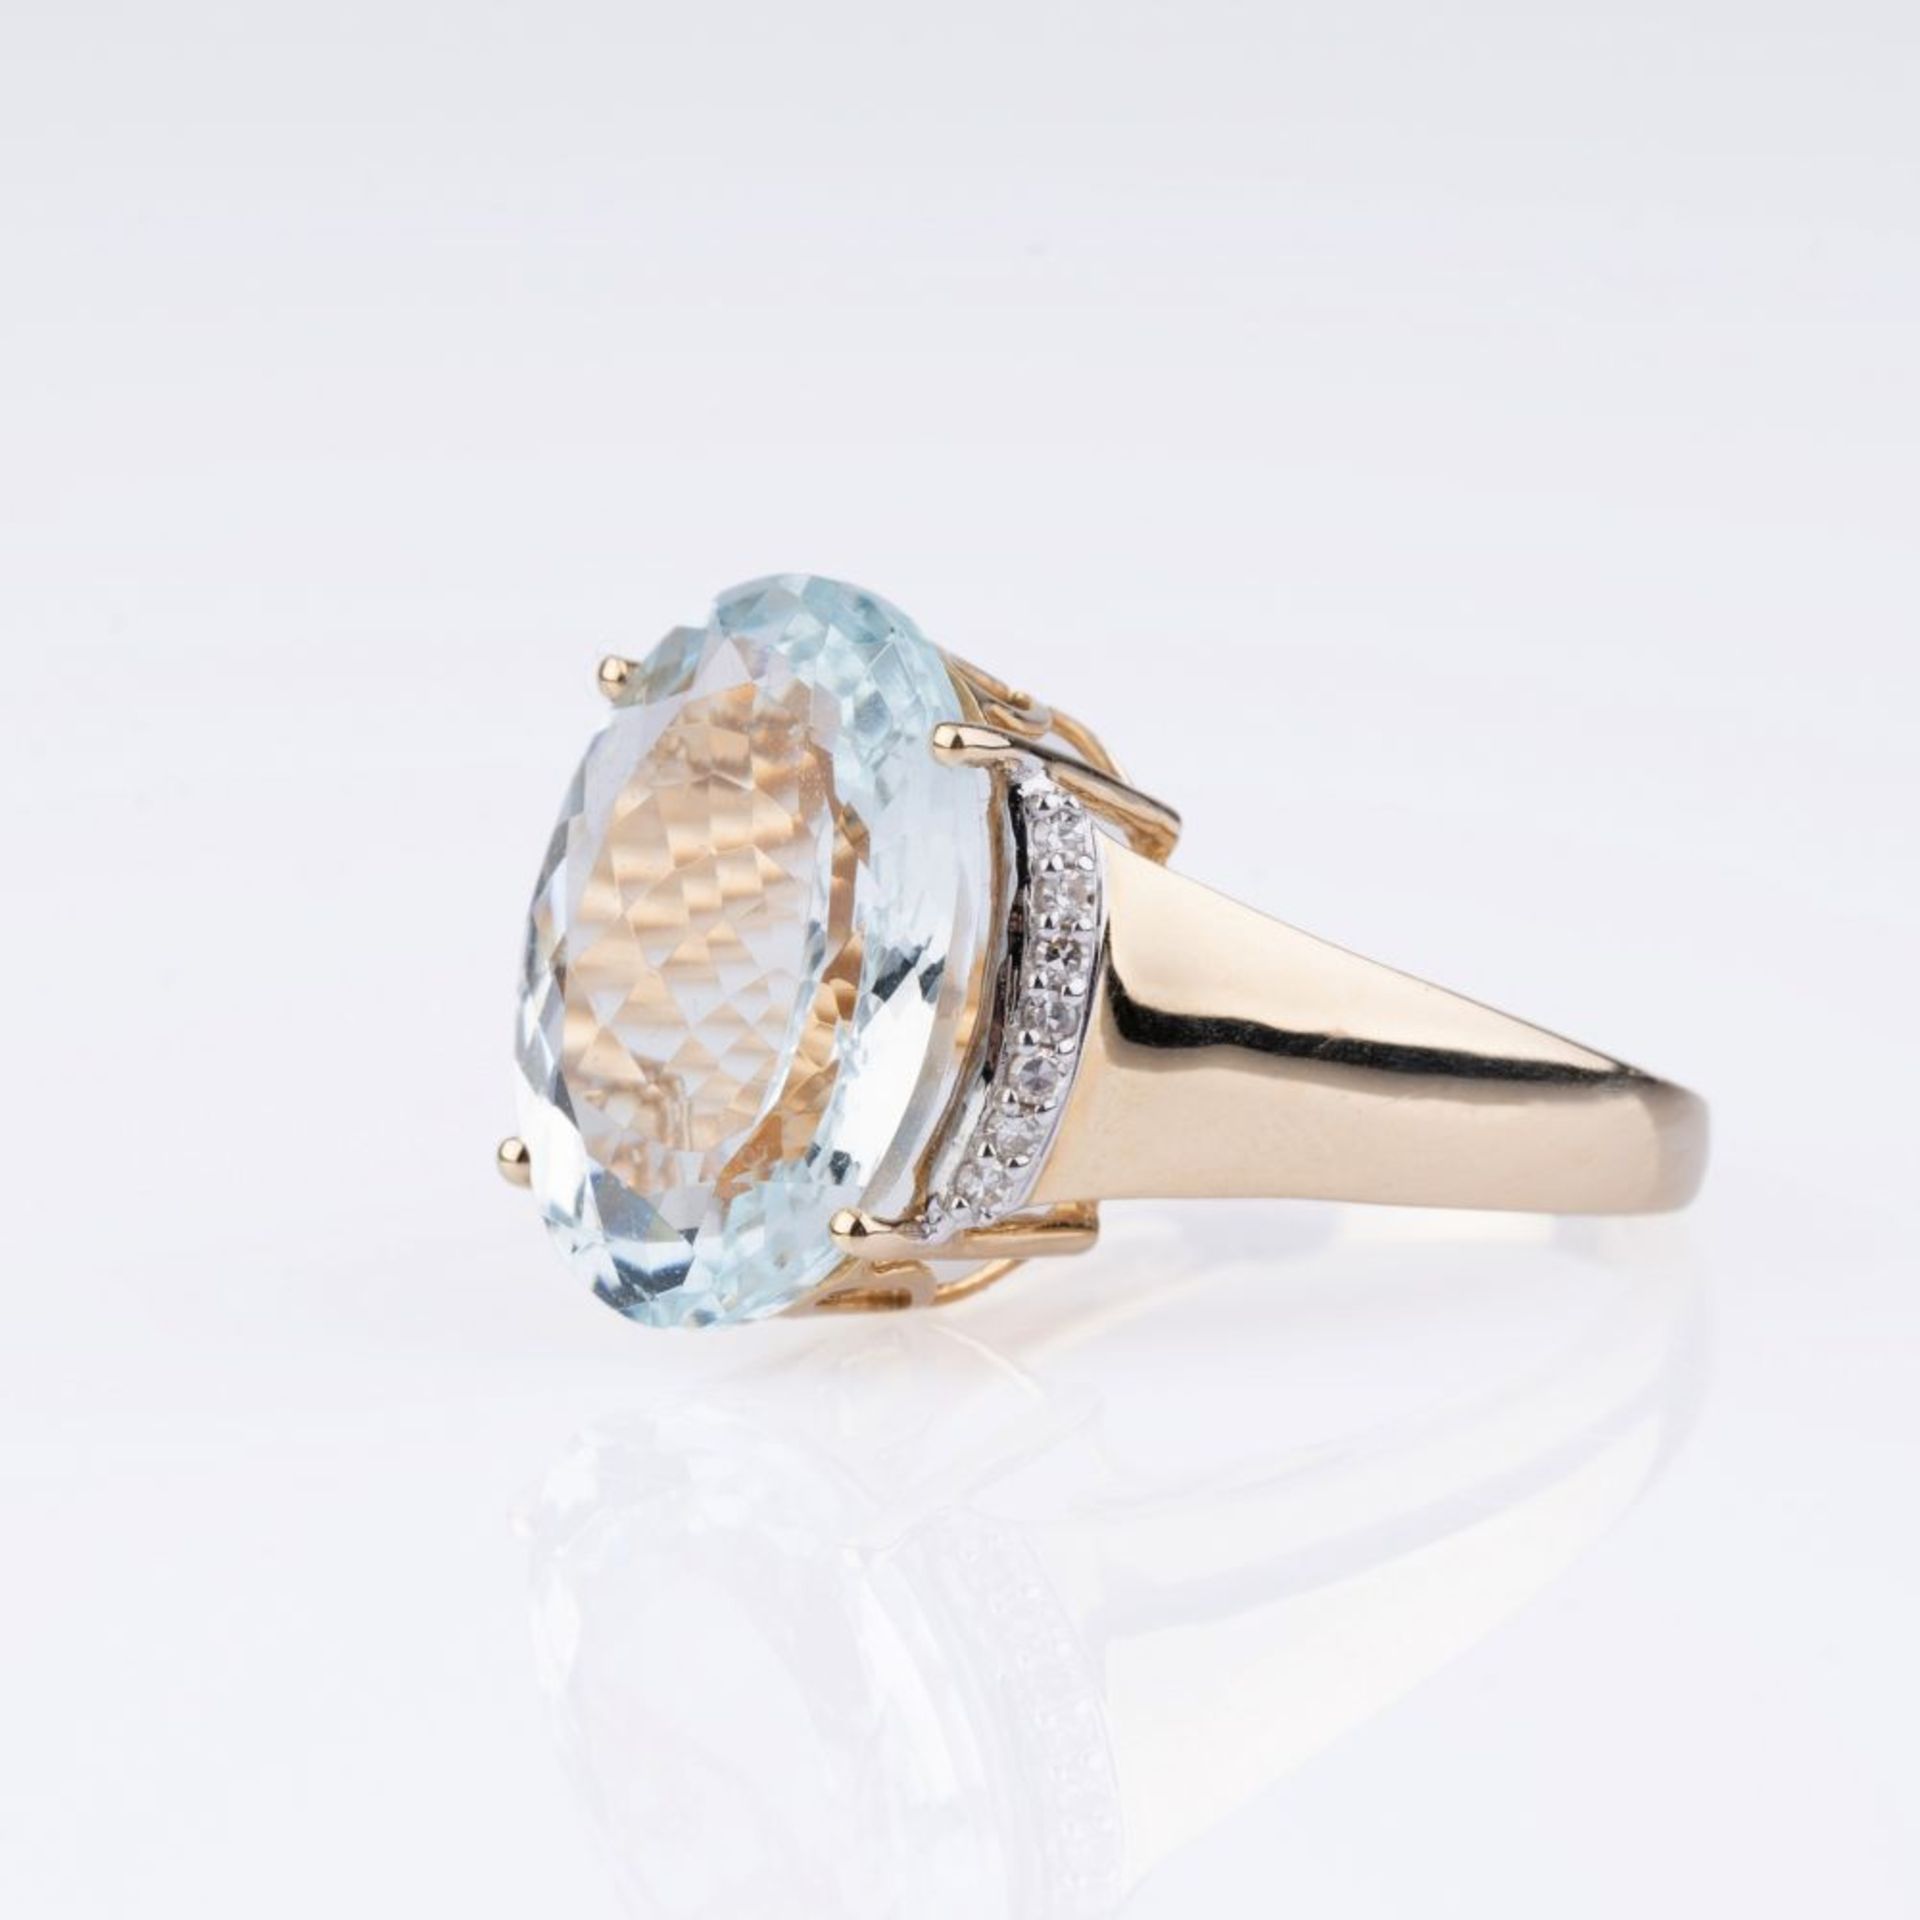 An Aquamarine Diamond Ring.